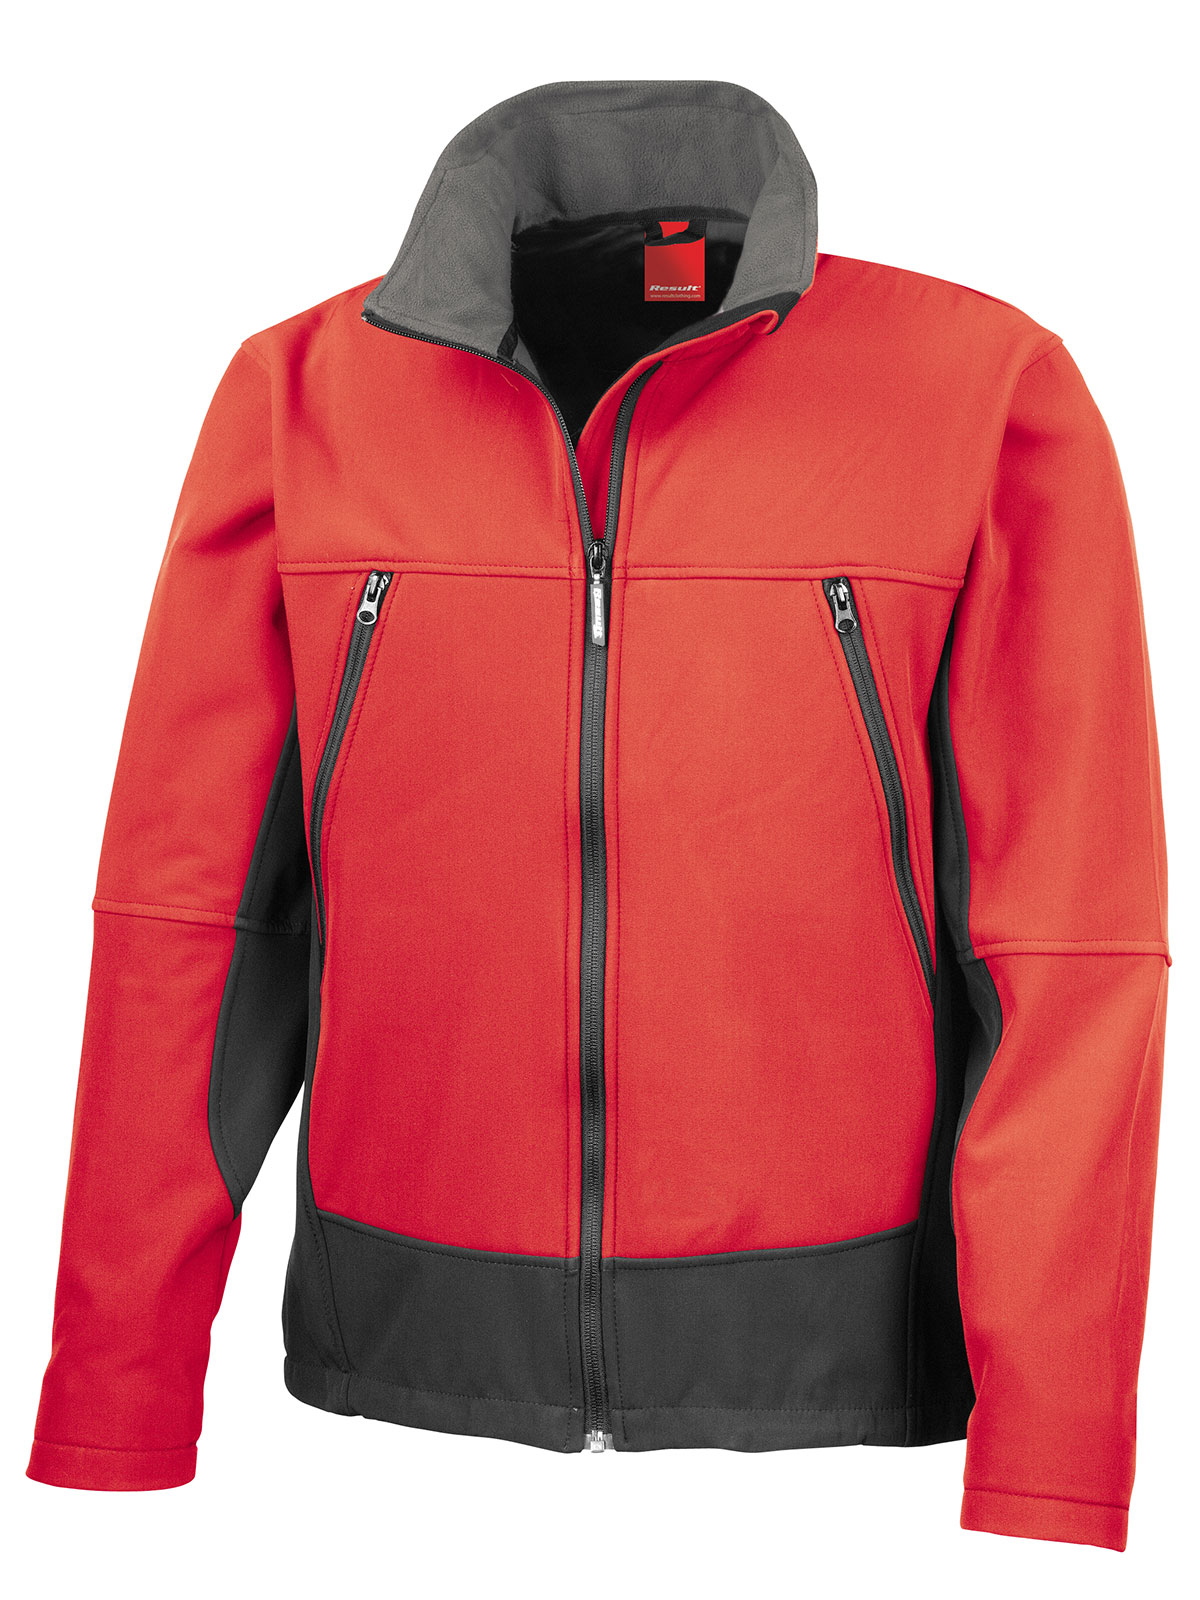 activity-softshell-jacket-redblack.webp